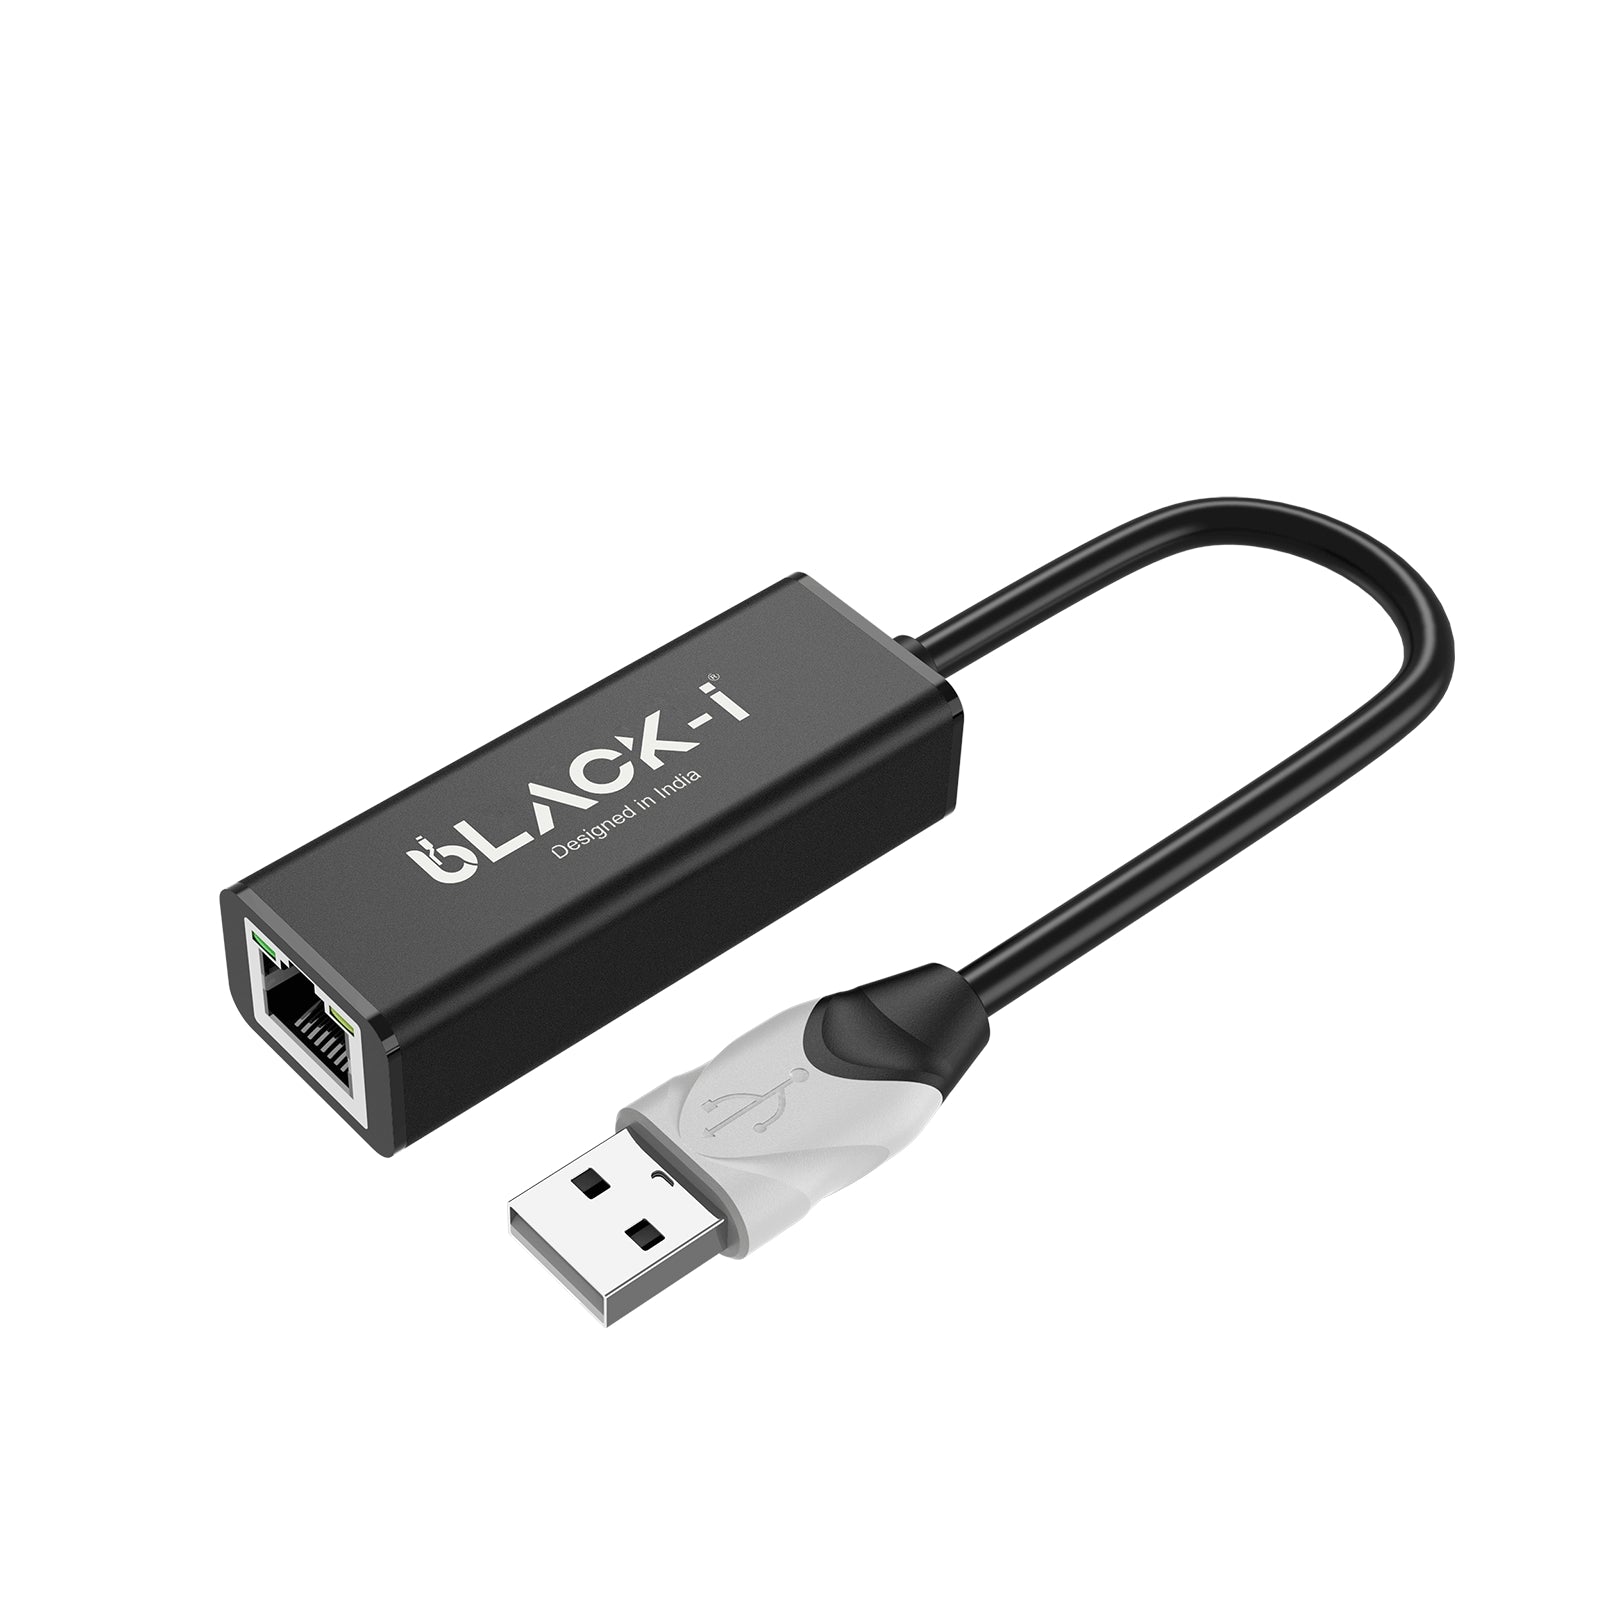 Black-i USB 2.0 to LAN 10/100 Mbps Converter – Swift Network Connectivity for Seamless Data Transmission